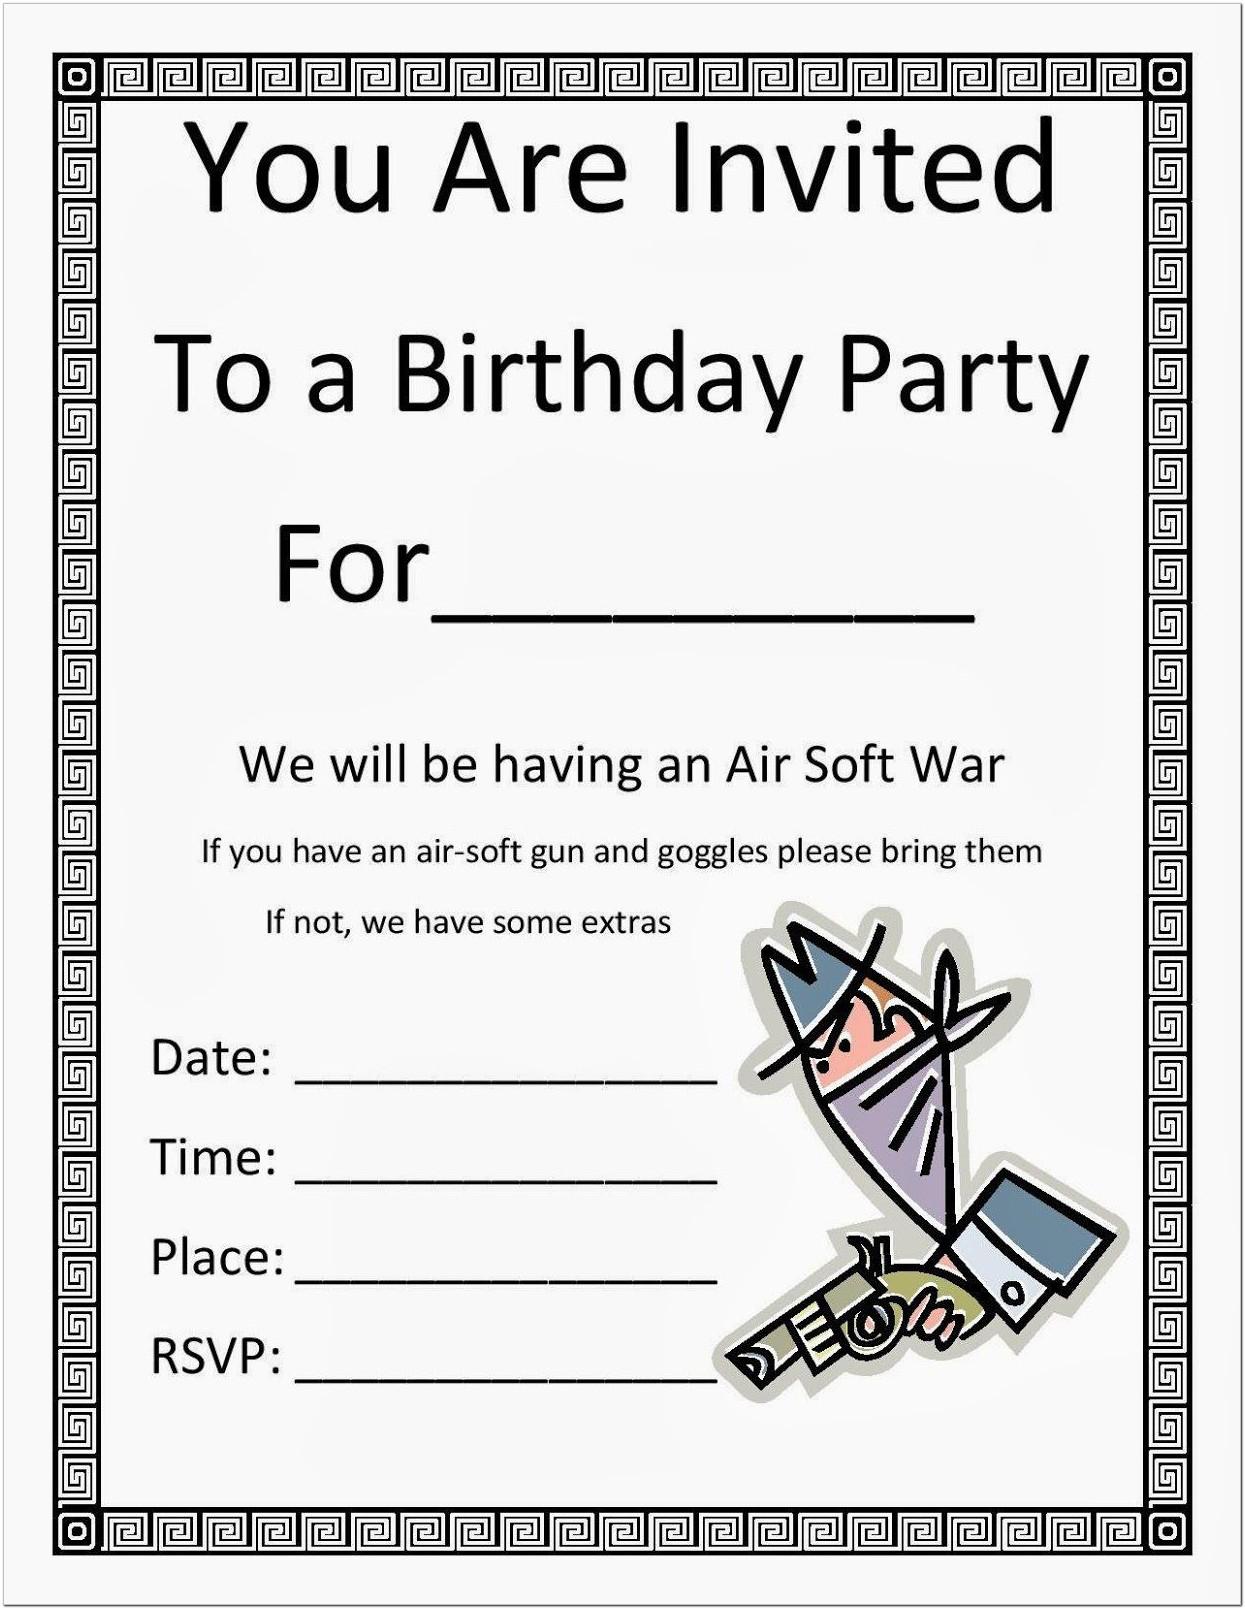 birthday-invite-templates-microsoft-word-templates-restiumani